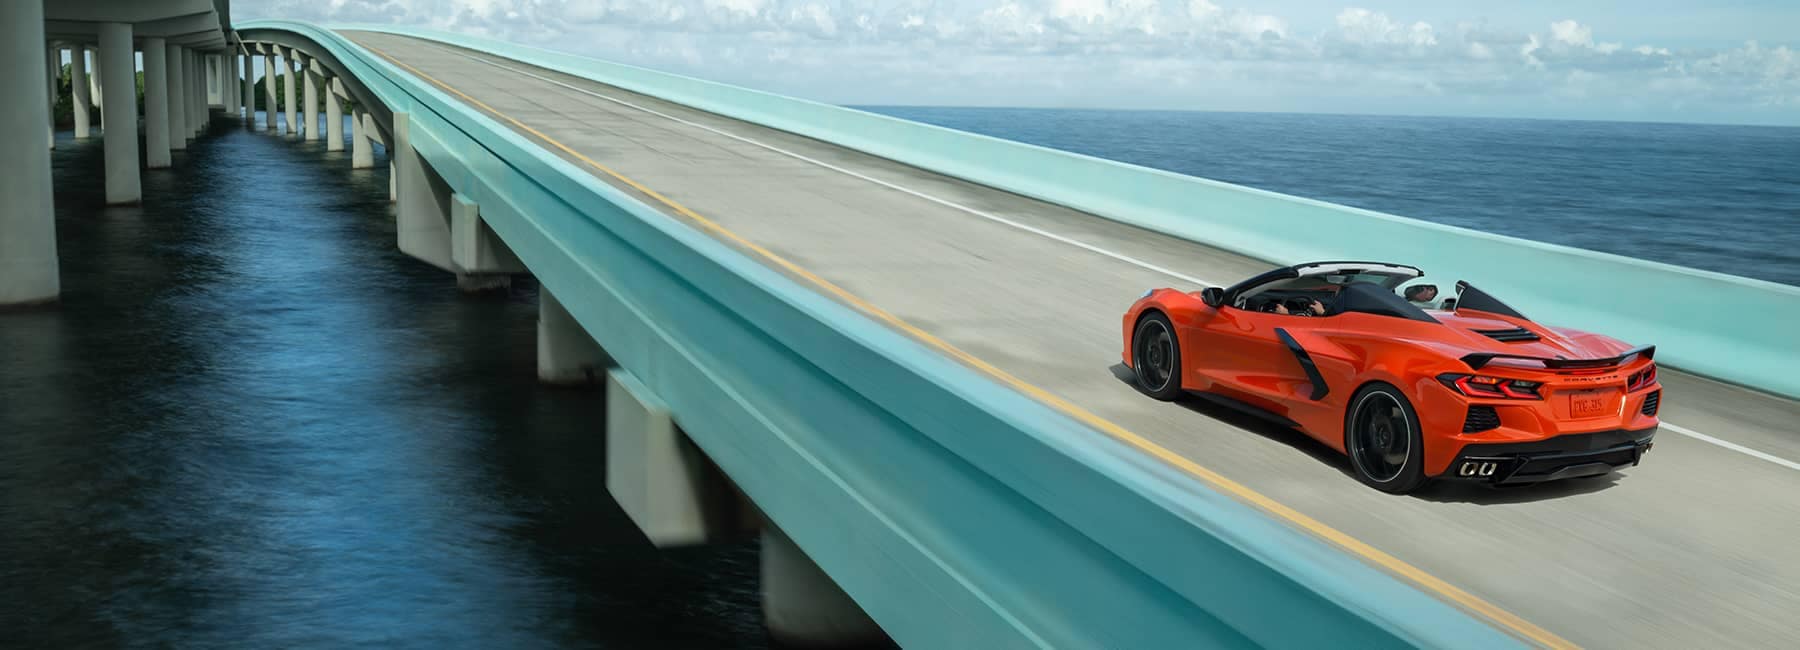 Red 2020 Chevrolet Corvette Stingray Convertible Driving on an Ocean Highway